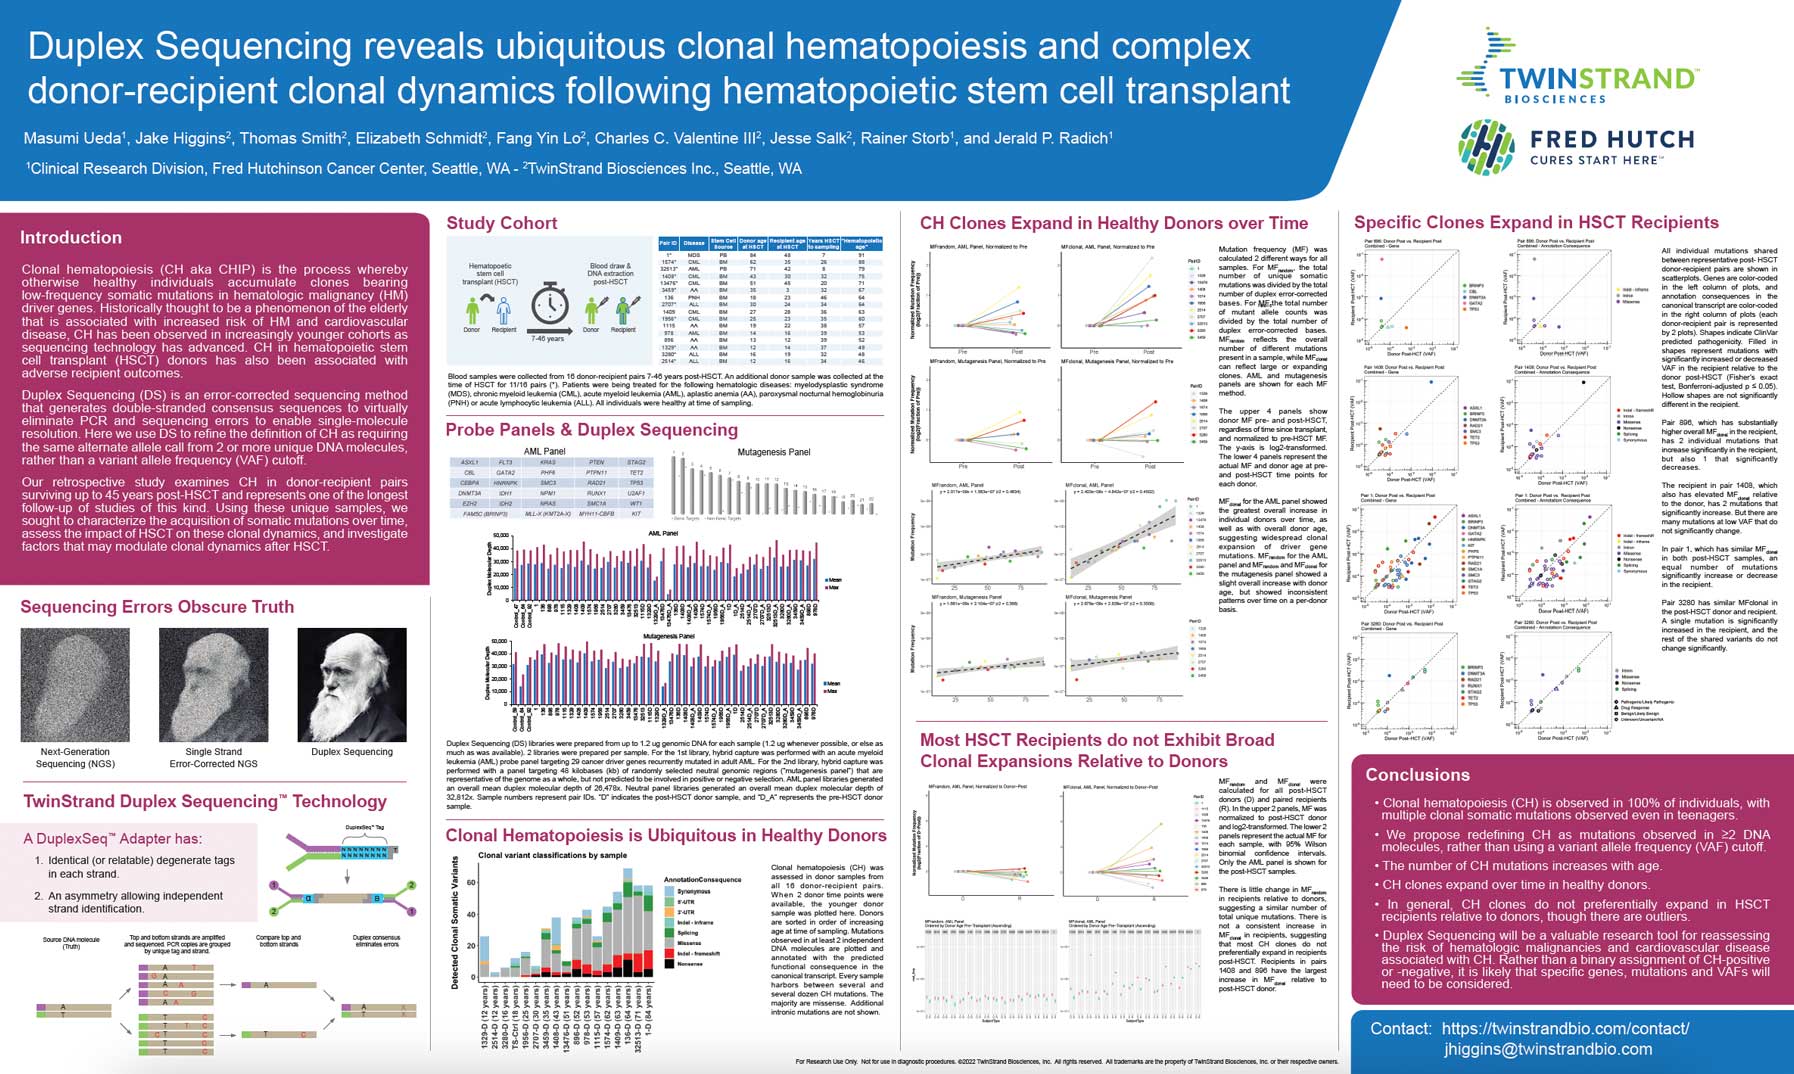 Duplex Sequencing reveals ubiquitous clonal hematopoiesis and complex donor-recipient clonal dynamics following hematopoietic stem cell transplant